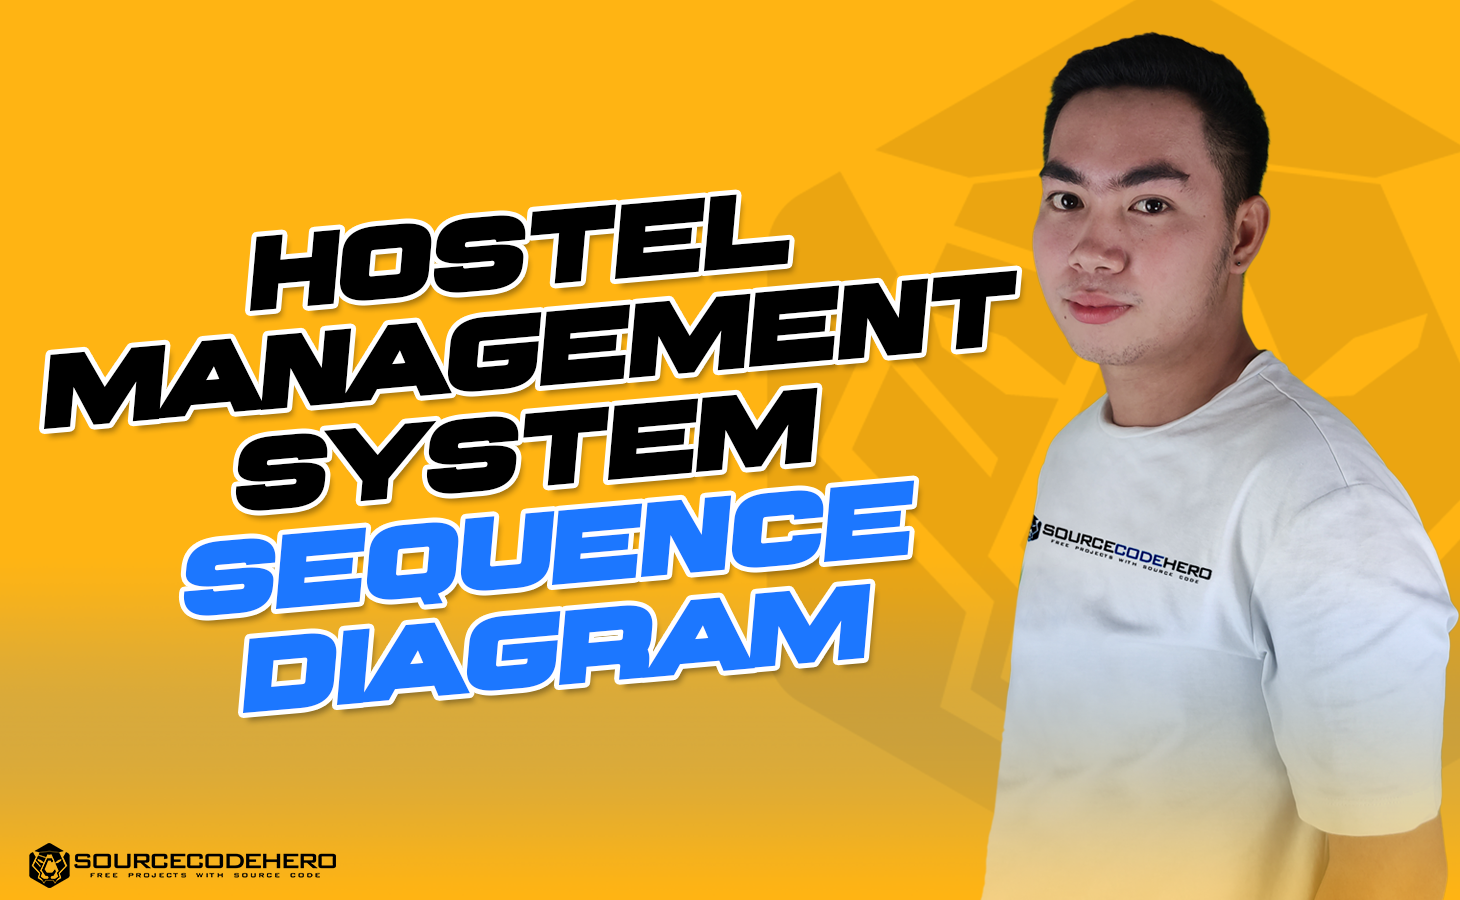 Hostel Management System Sequence Diagram